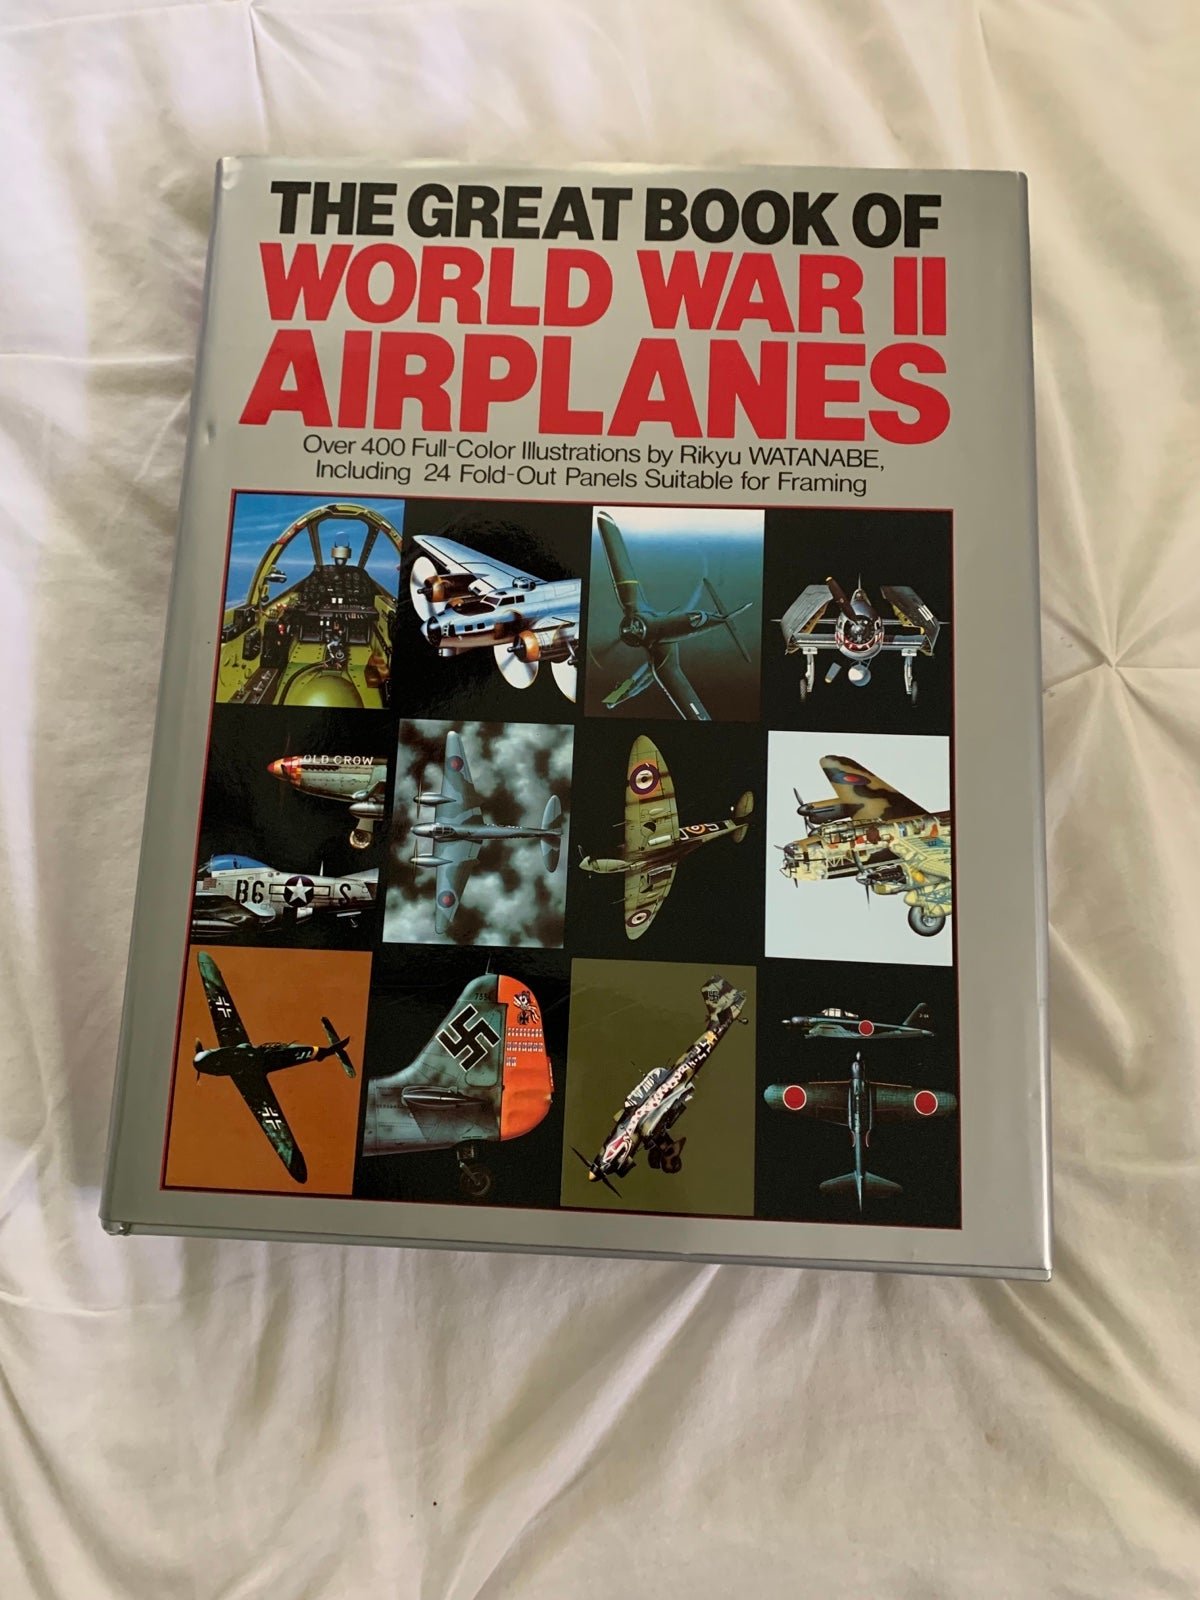 World War II airplanes book J6veJVmjf